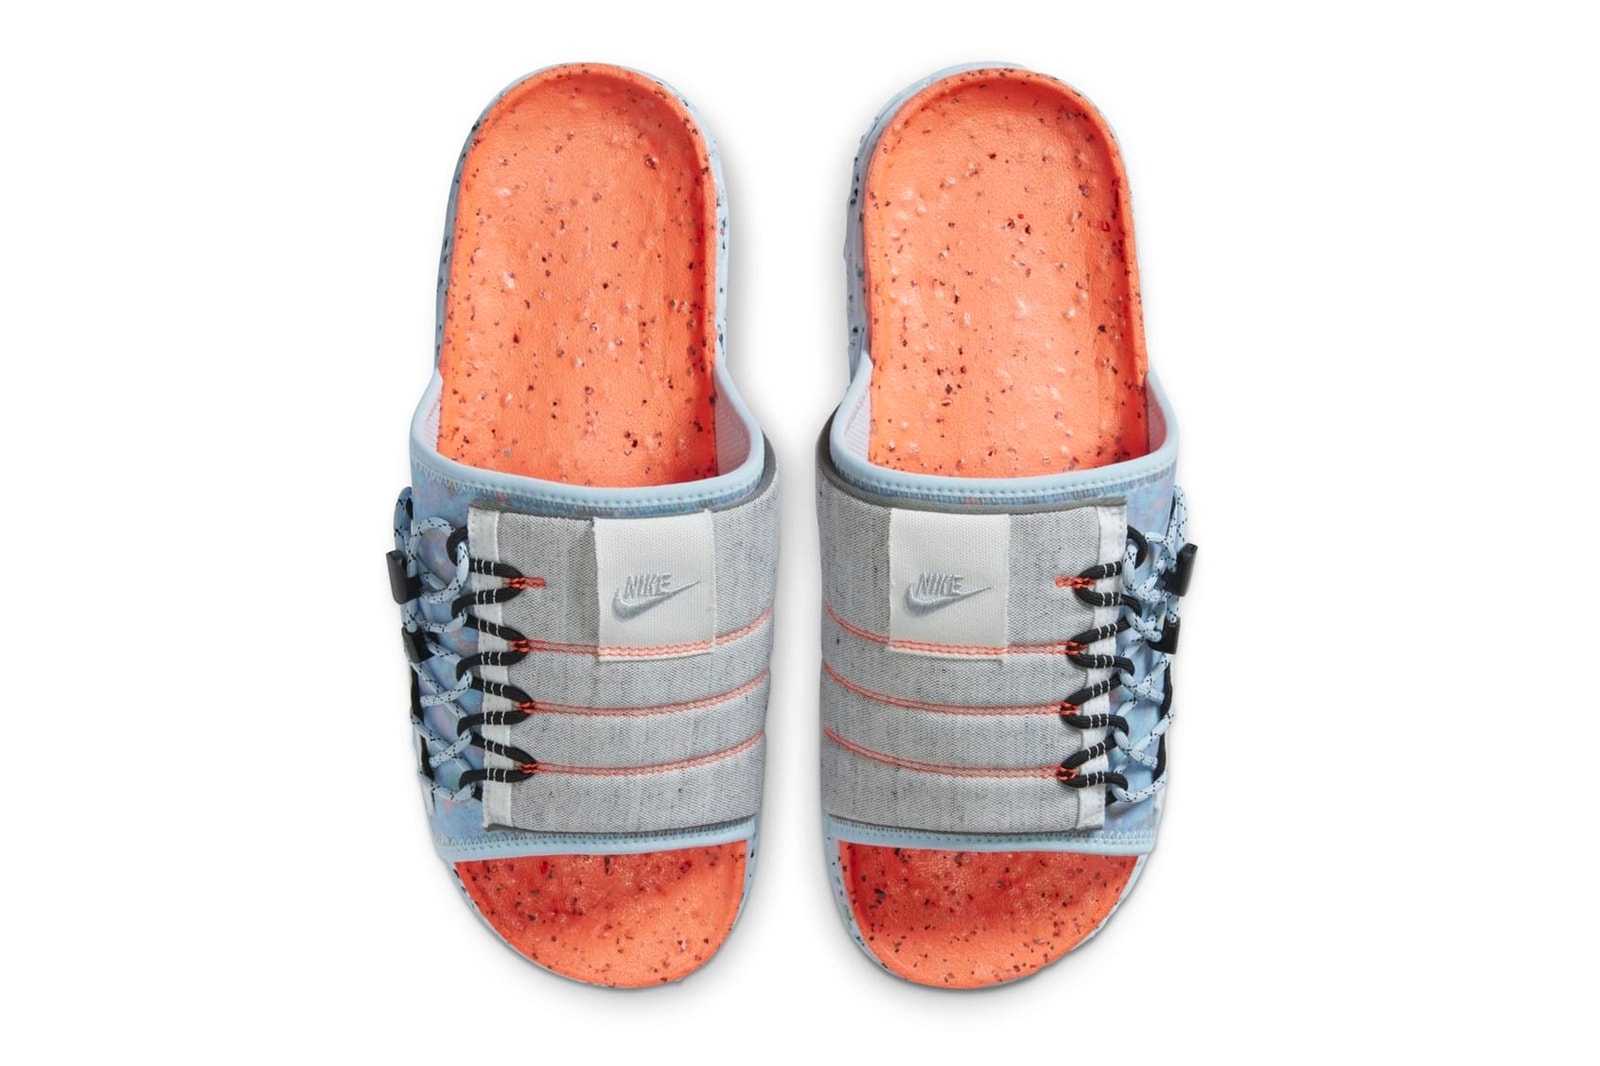 Nike 即將推出「Space Hippie」系列涼鞋鞋款